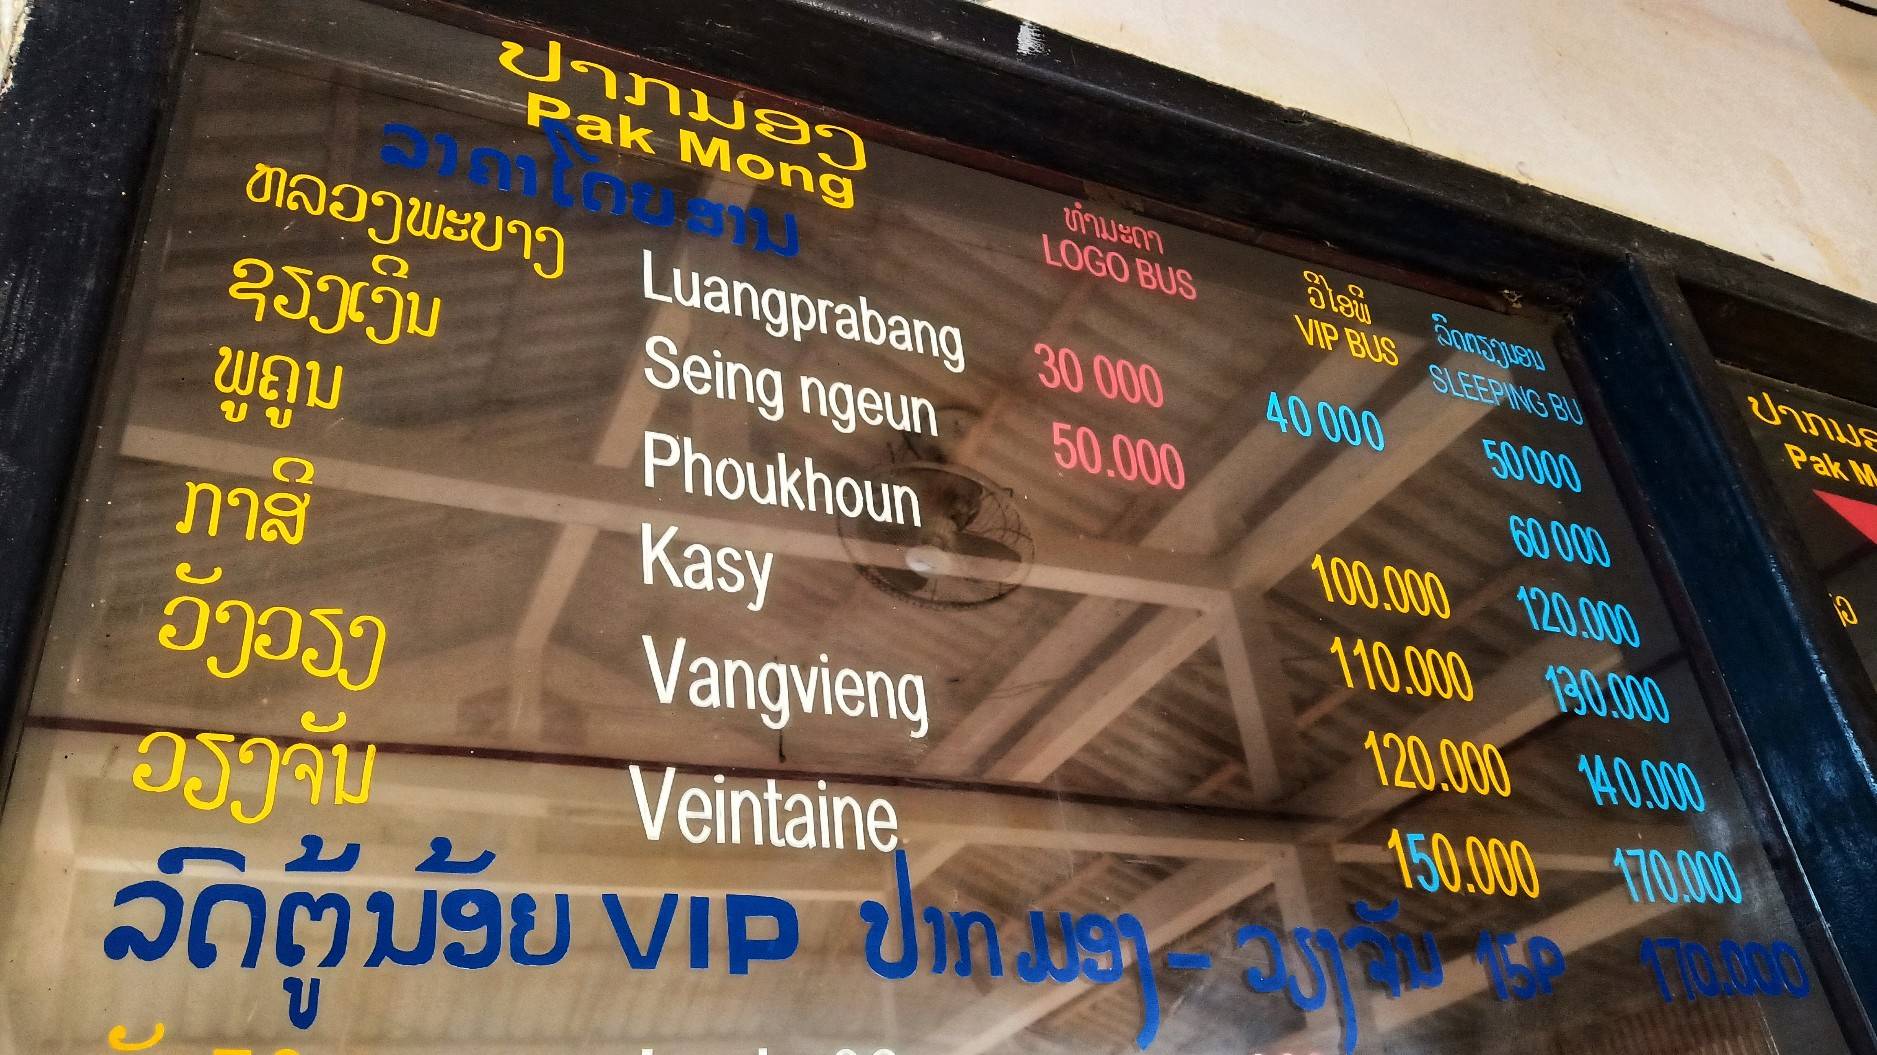 Pakmong to Phonsavan sleeper “VIP” bus for 150,000 kip